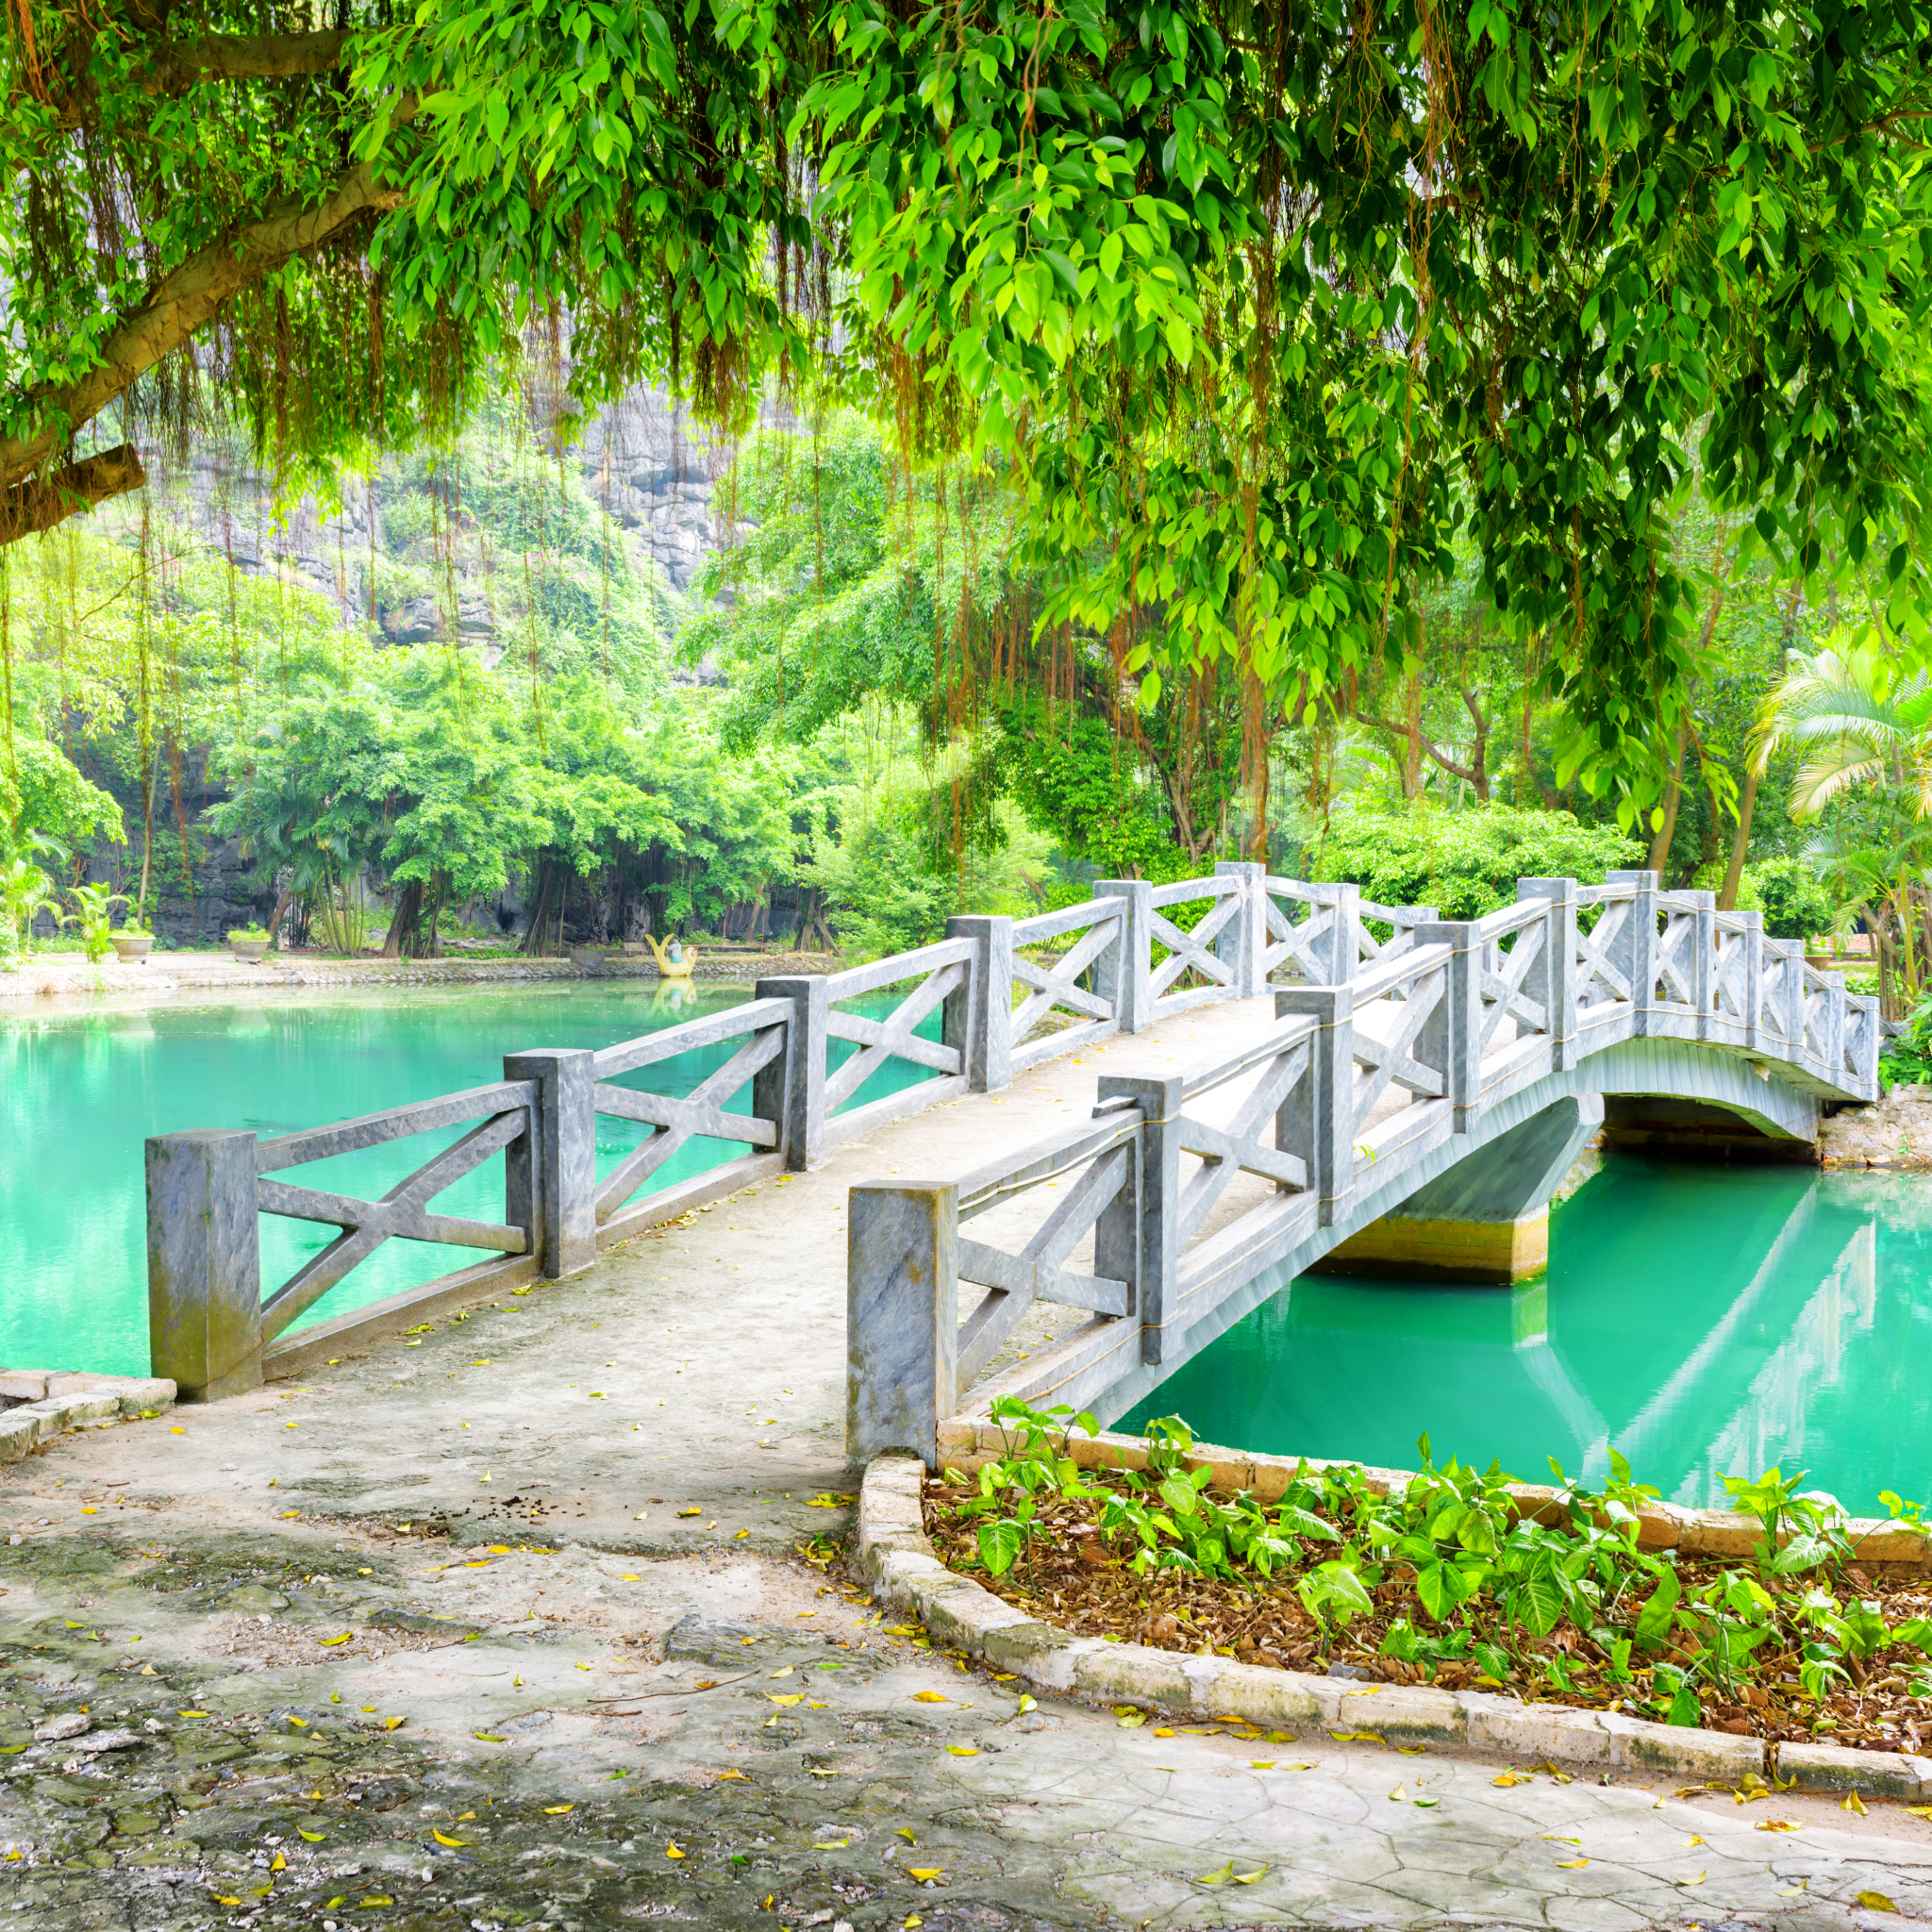 Park with Bridge in Vietnam